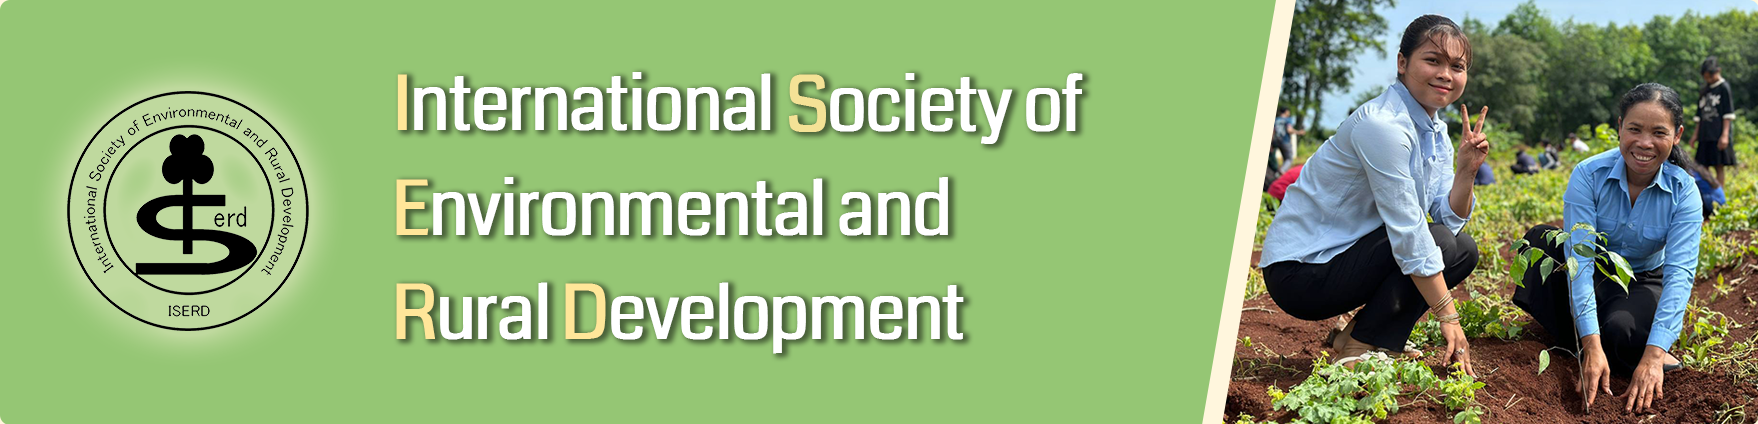 International Society of Environmental and Rural Development